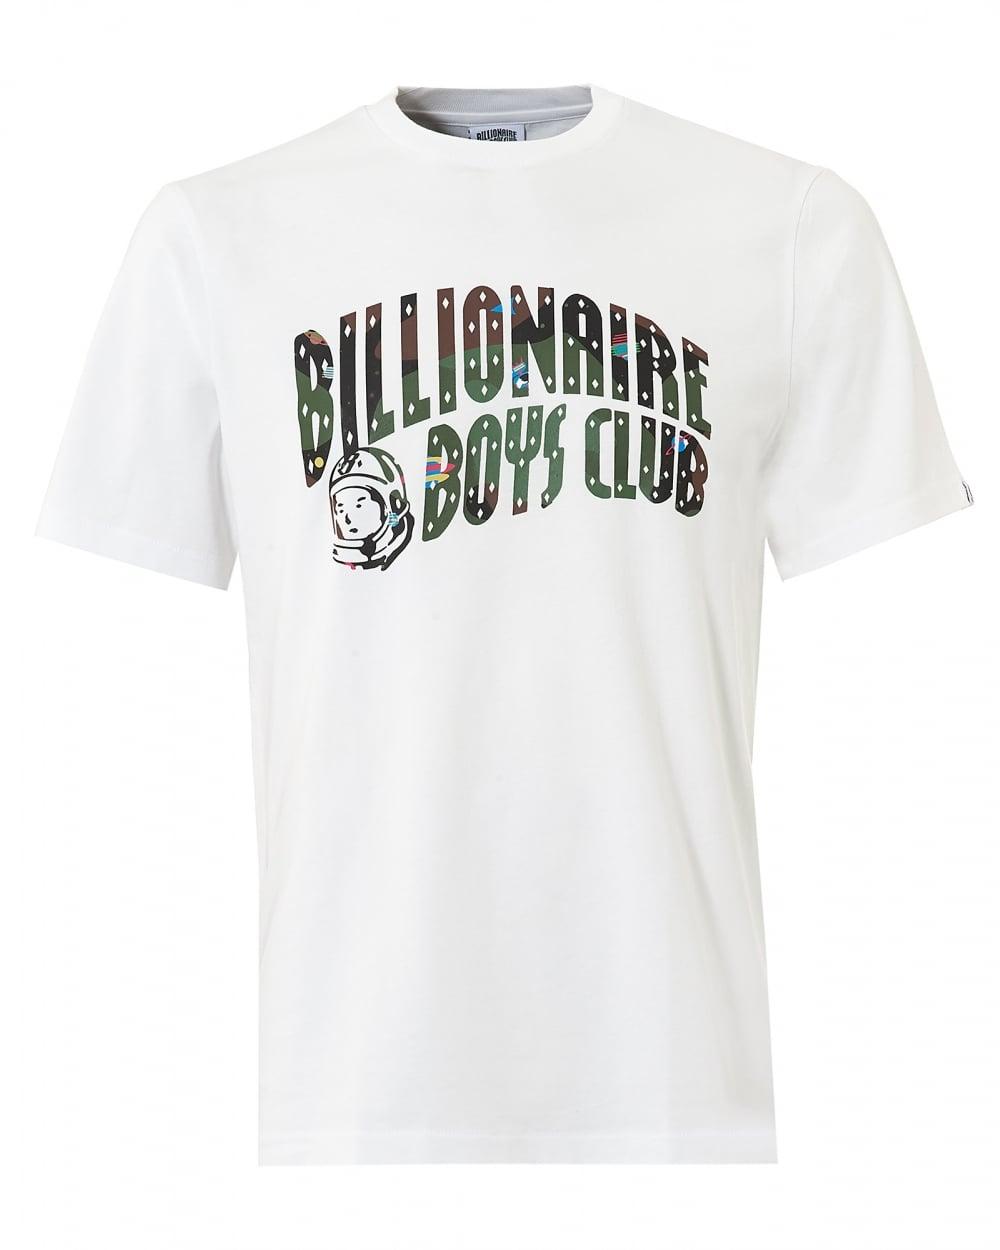 Billonaire Boys Club Logo - Billionaire Boys Club Mens Camo Logo T Shirt, Short Sleeve White Tee